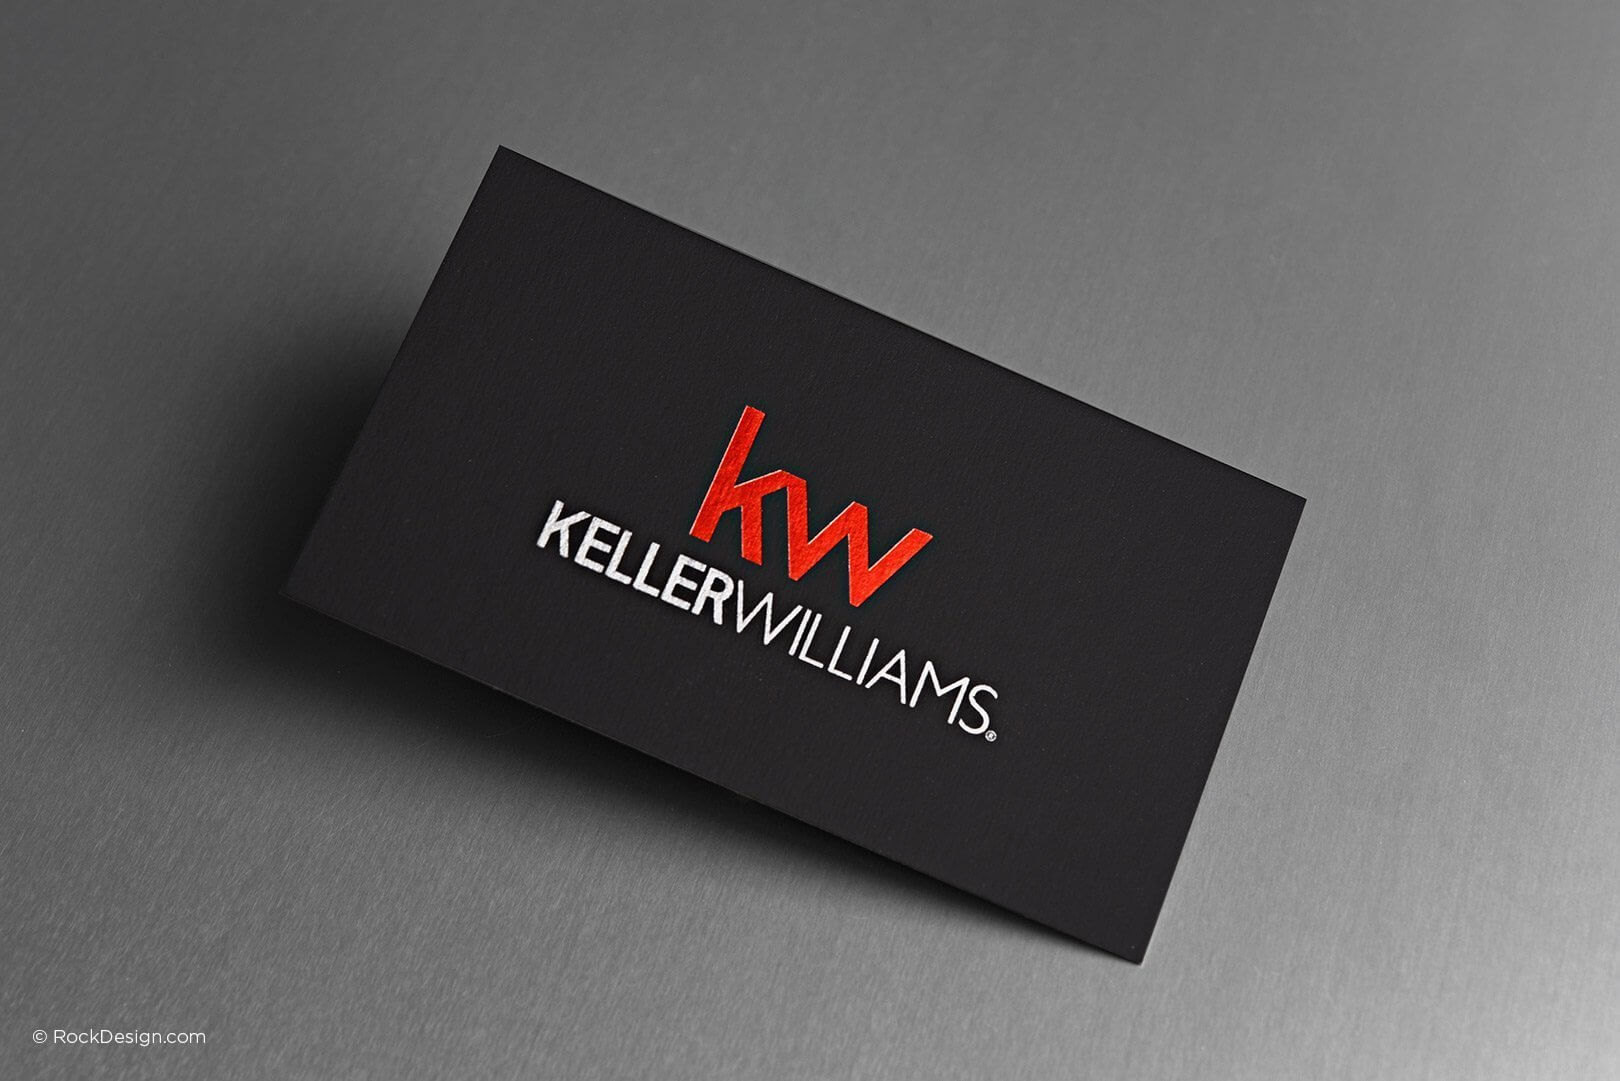 Free Keller Williams Business Card Template With Print Pertaining To Keller Williams Business Card Templates